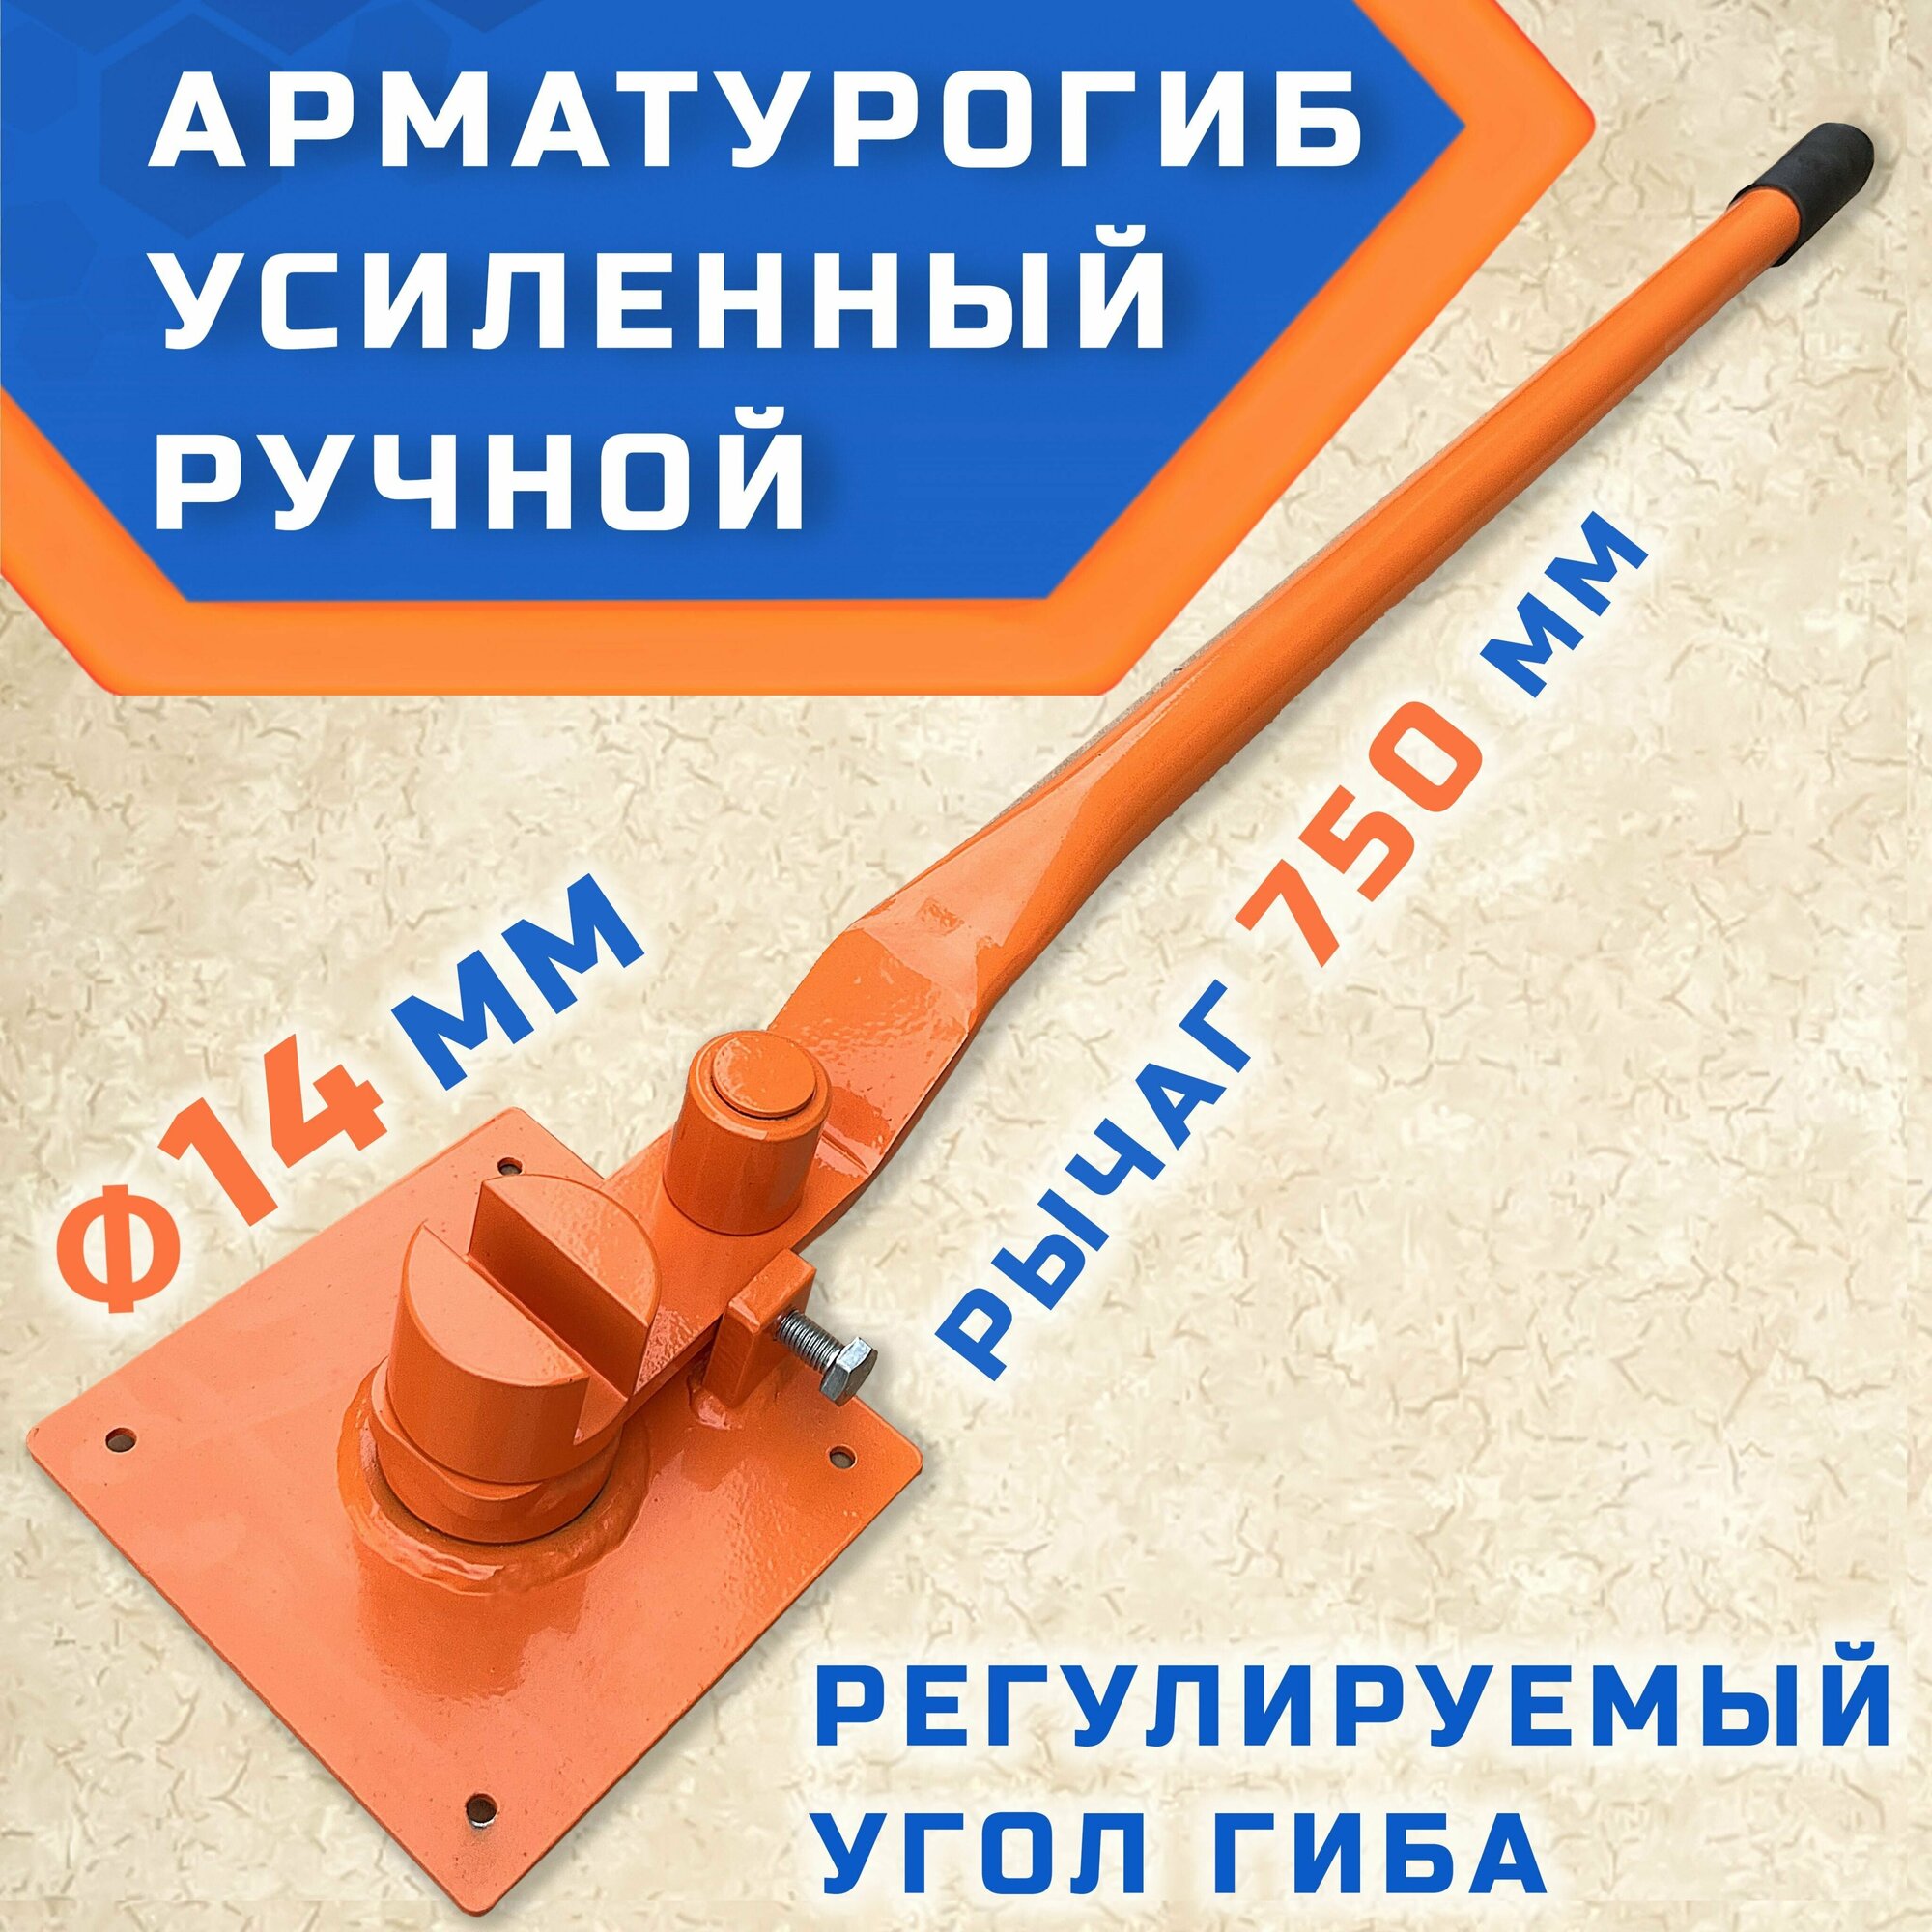 Арматурогиб гибман АМГ-14 ПАЗ (плавный гиб) ручной станок для гибки арматуры диаметром до 14 мм рифлёной и 16 мм гладкой